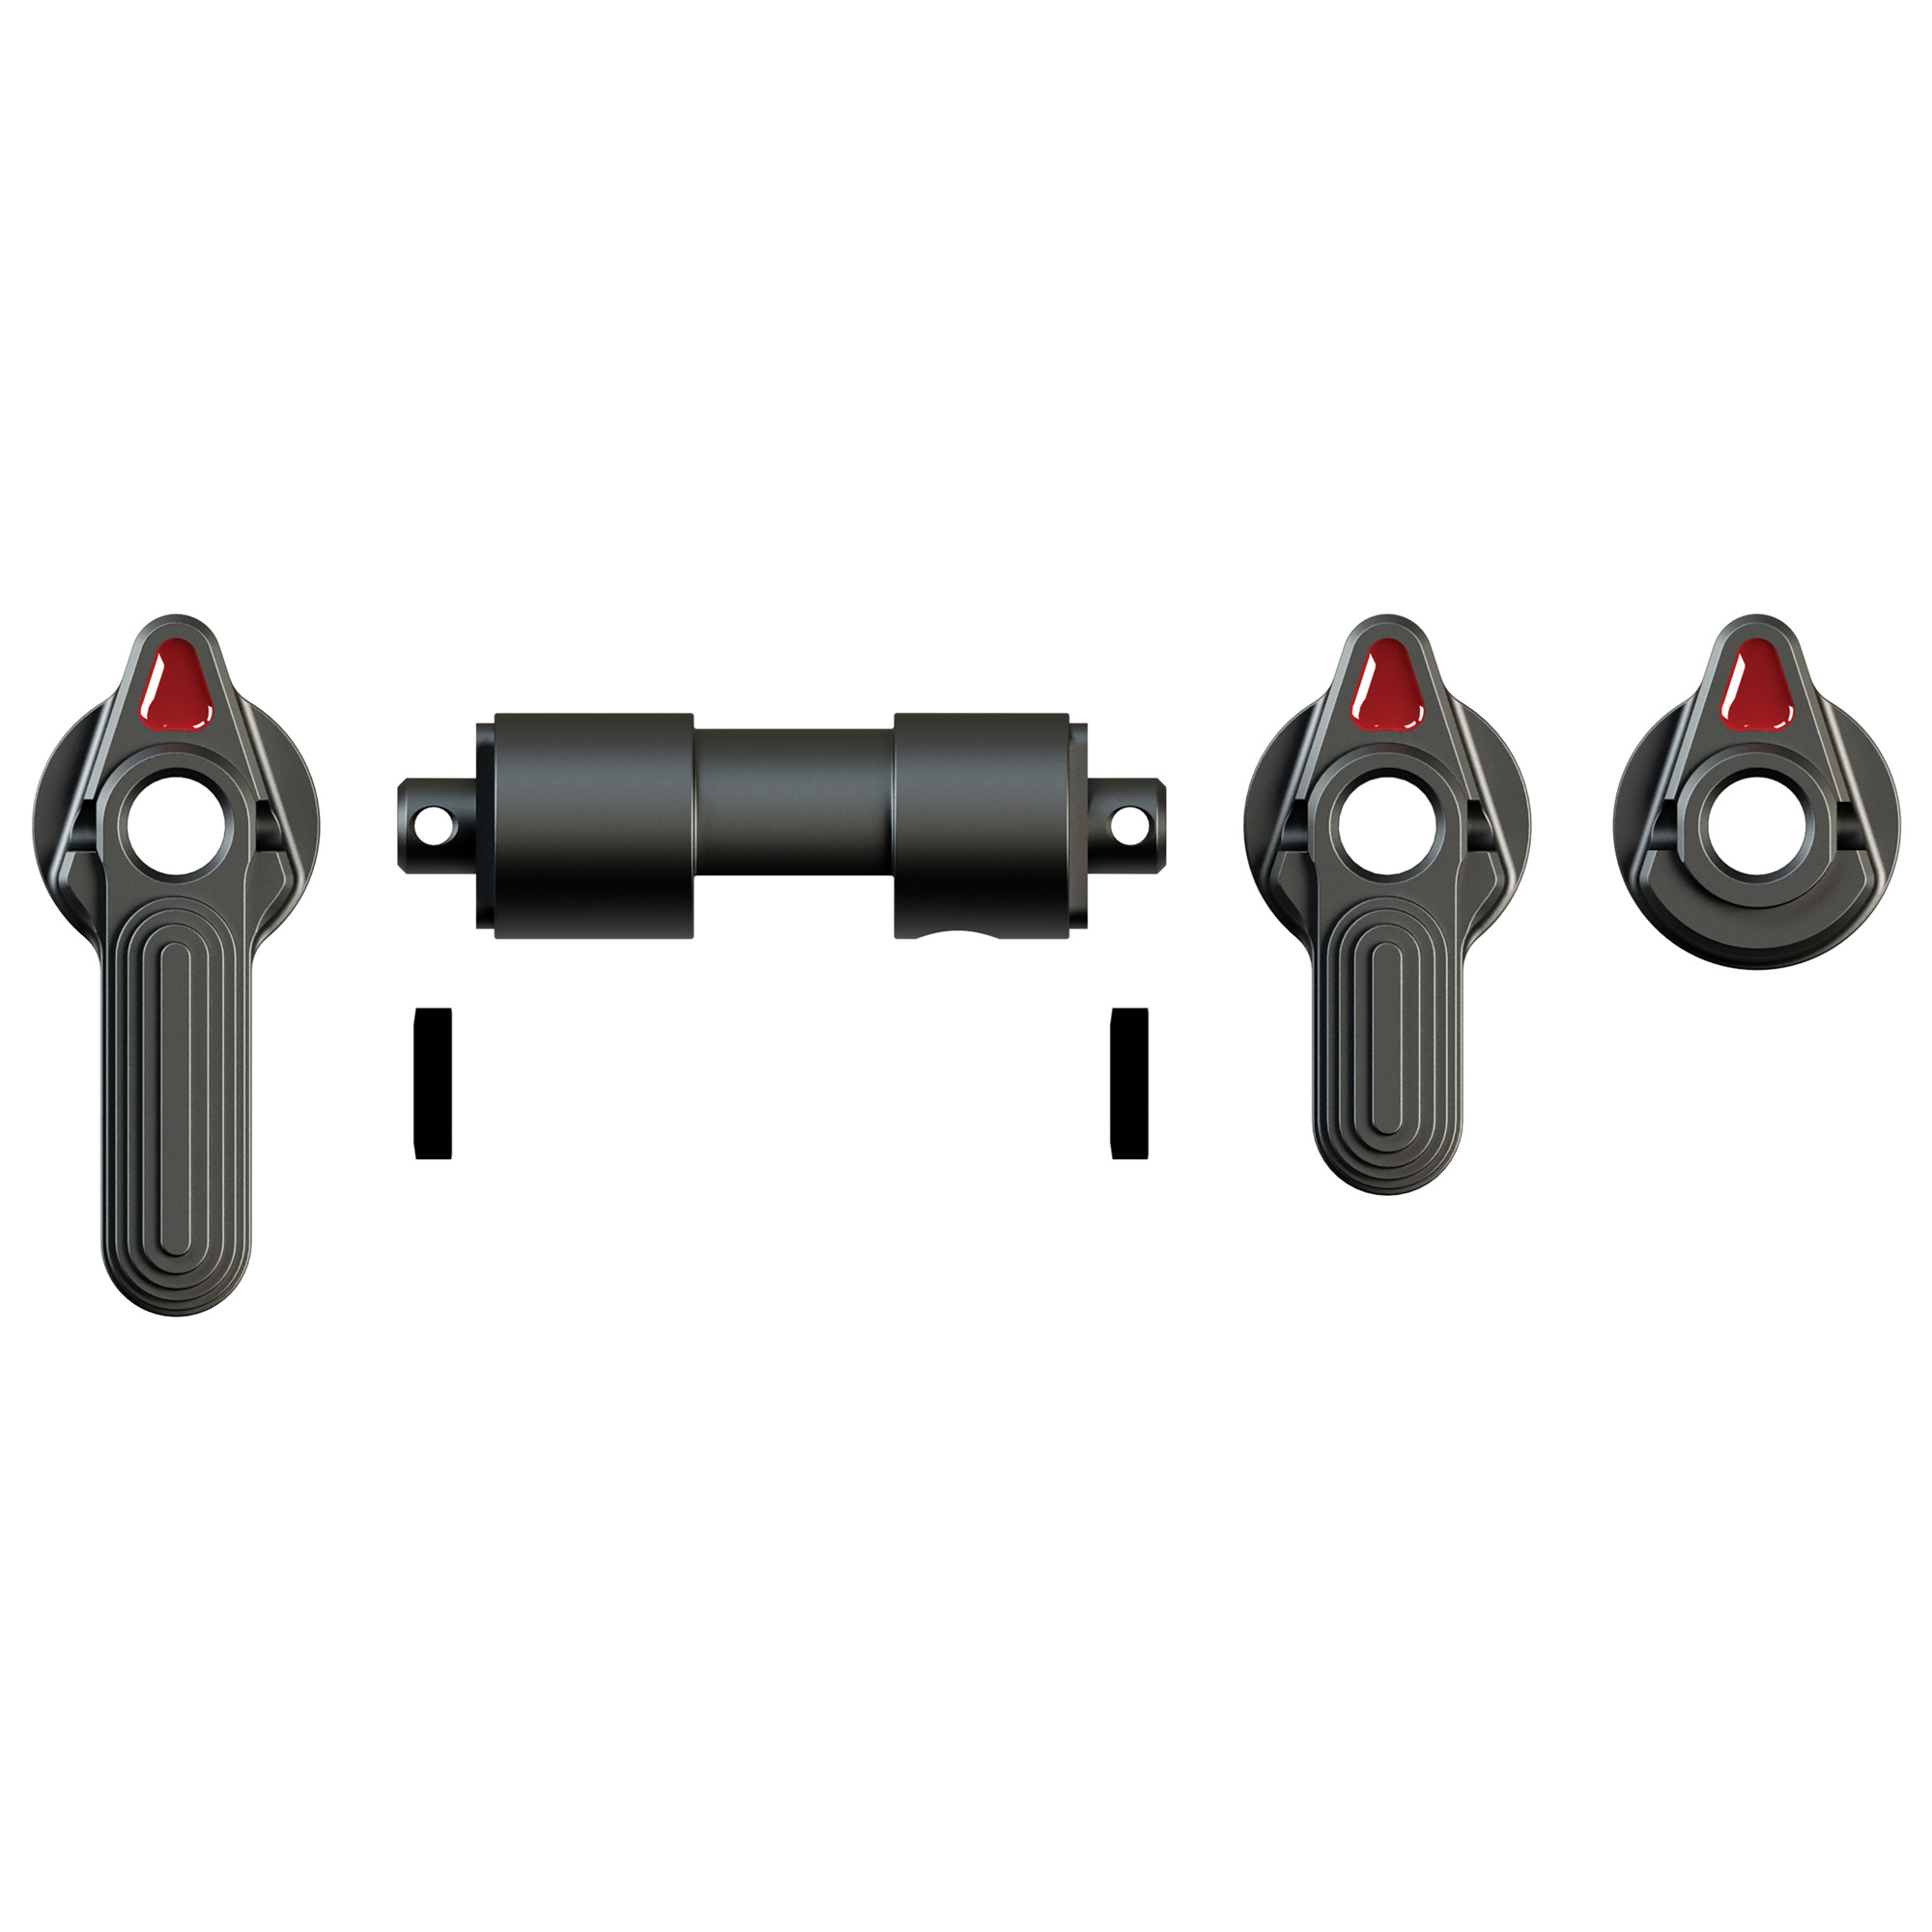 Badger Ordnance C1 Modular Safety Selector Black Manganese Finish, 249-51, Sku: 249-51-51T UPC: 249-51-51T